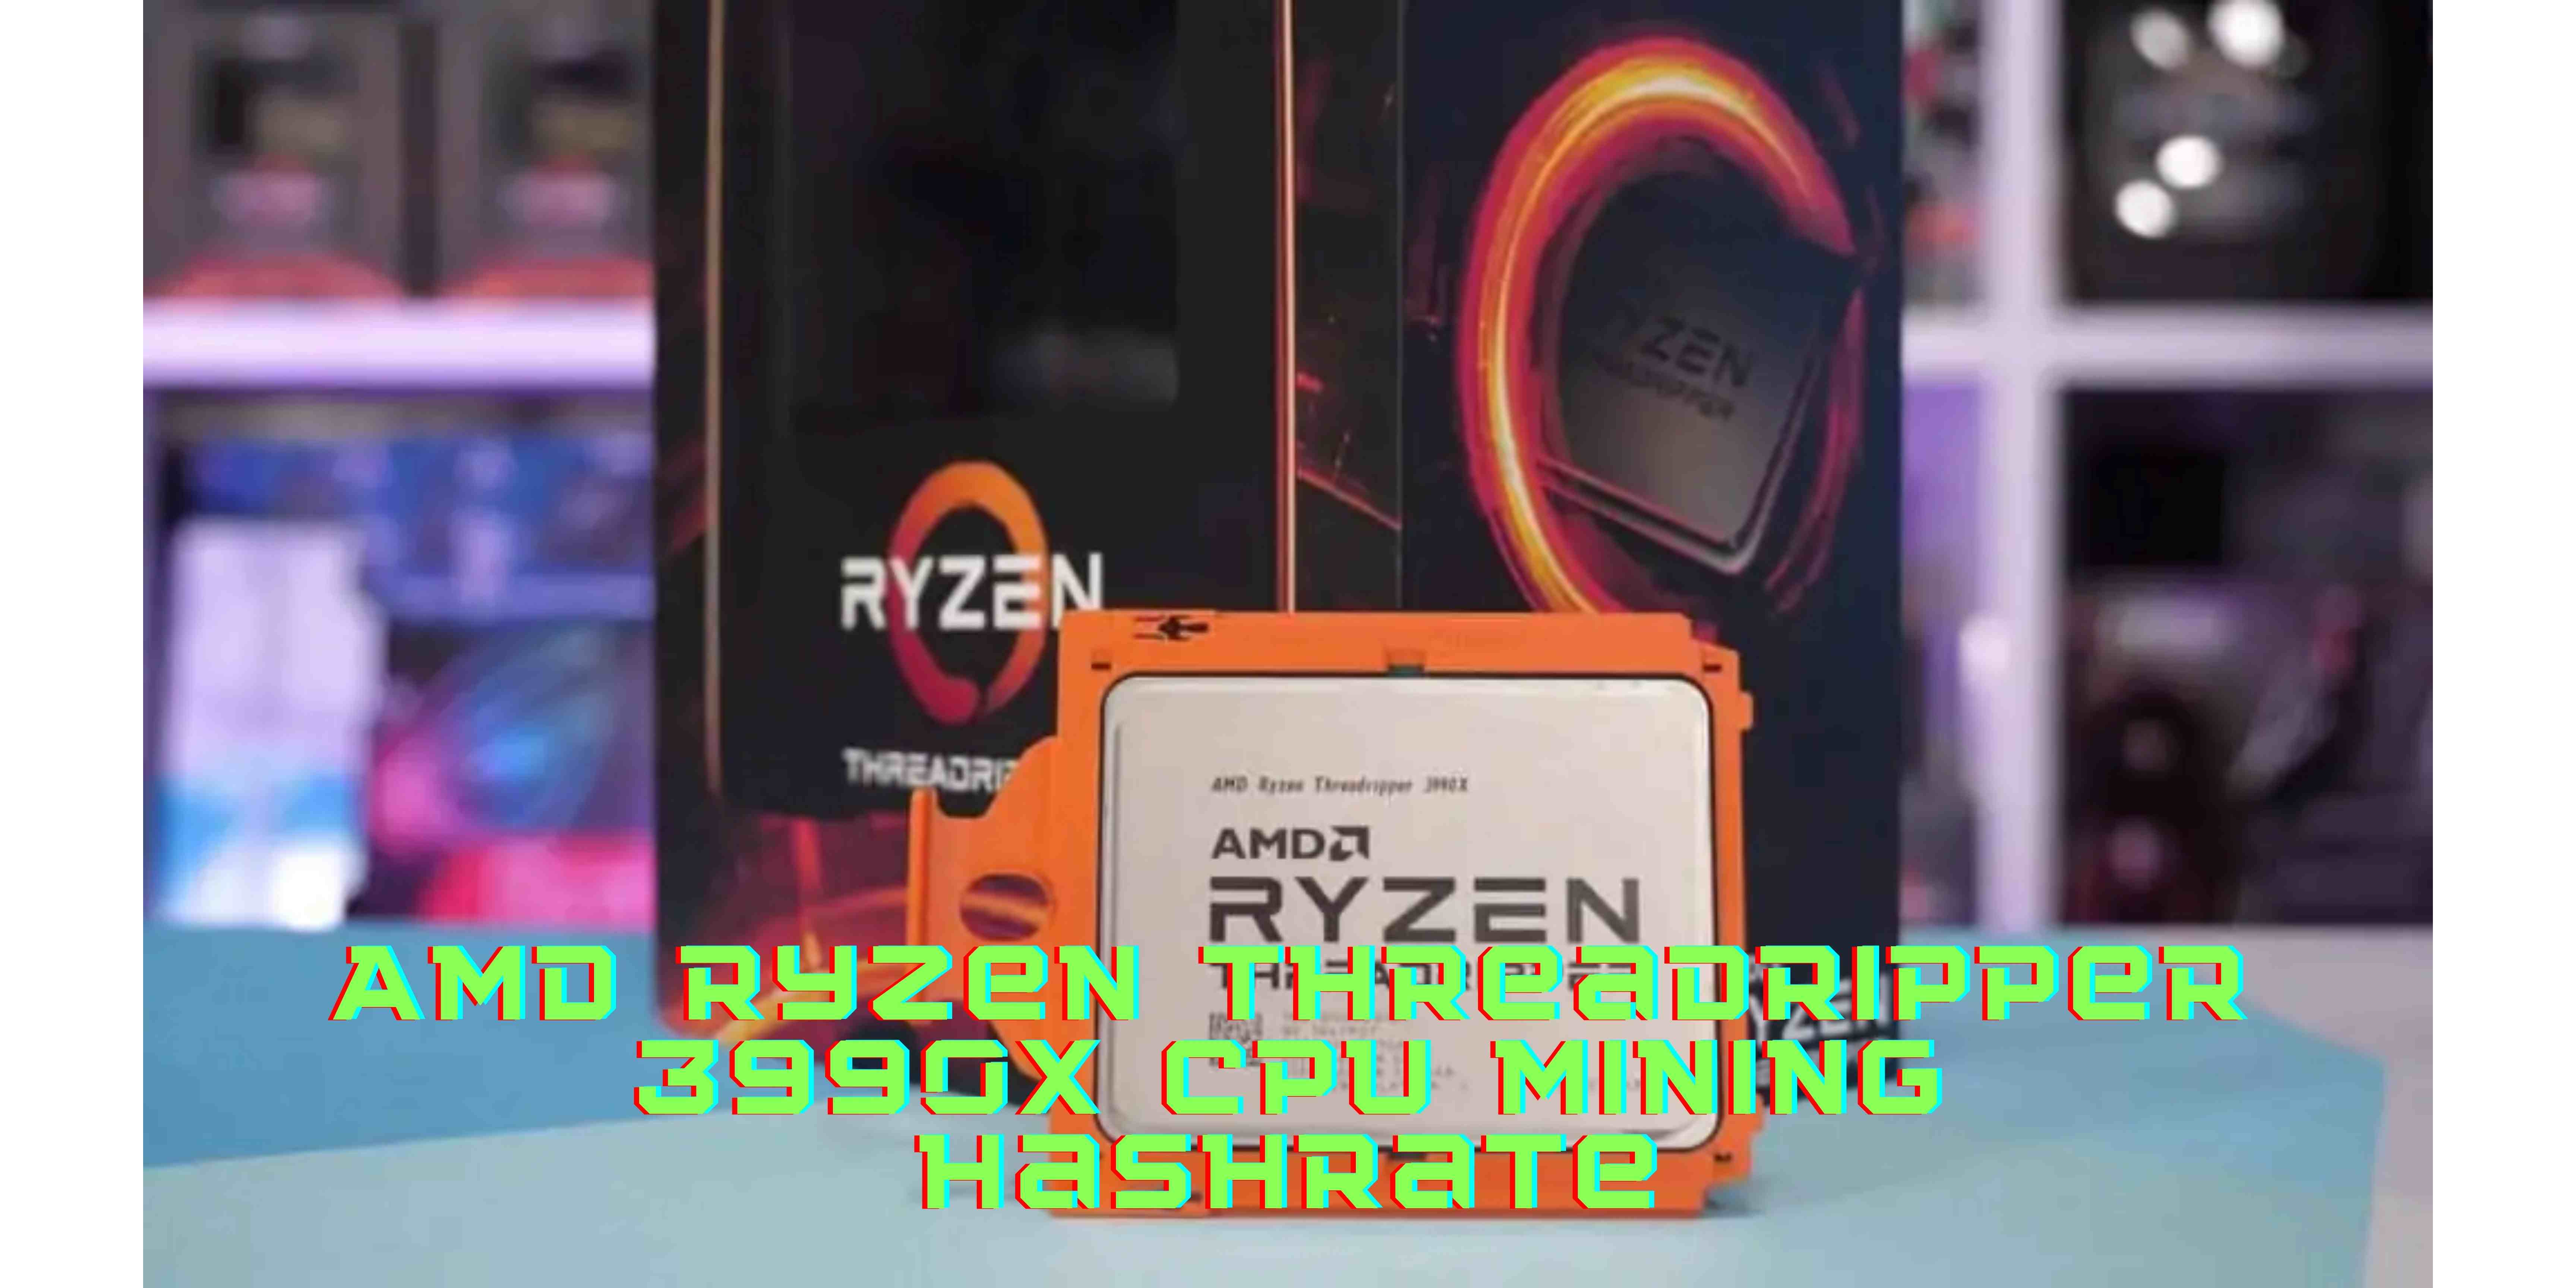 Is The AMD Ryzen Threadripper 3990x CPU Mining Hashrate Enough For Mining?